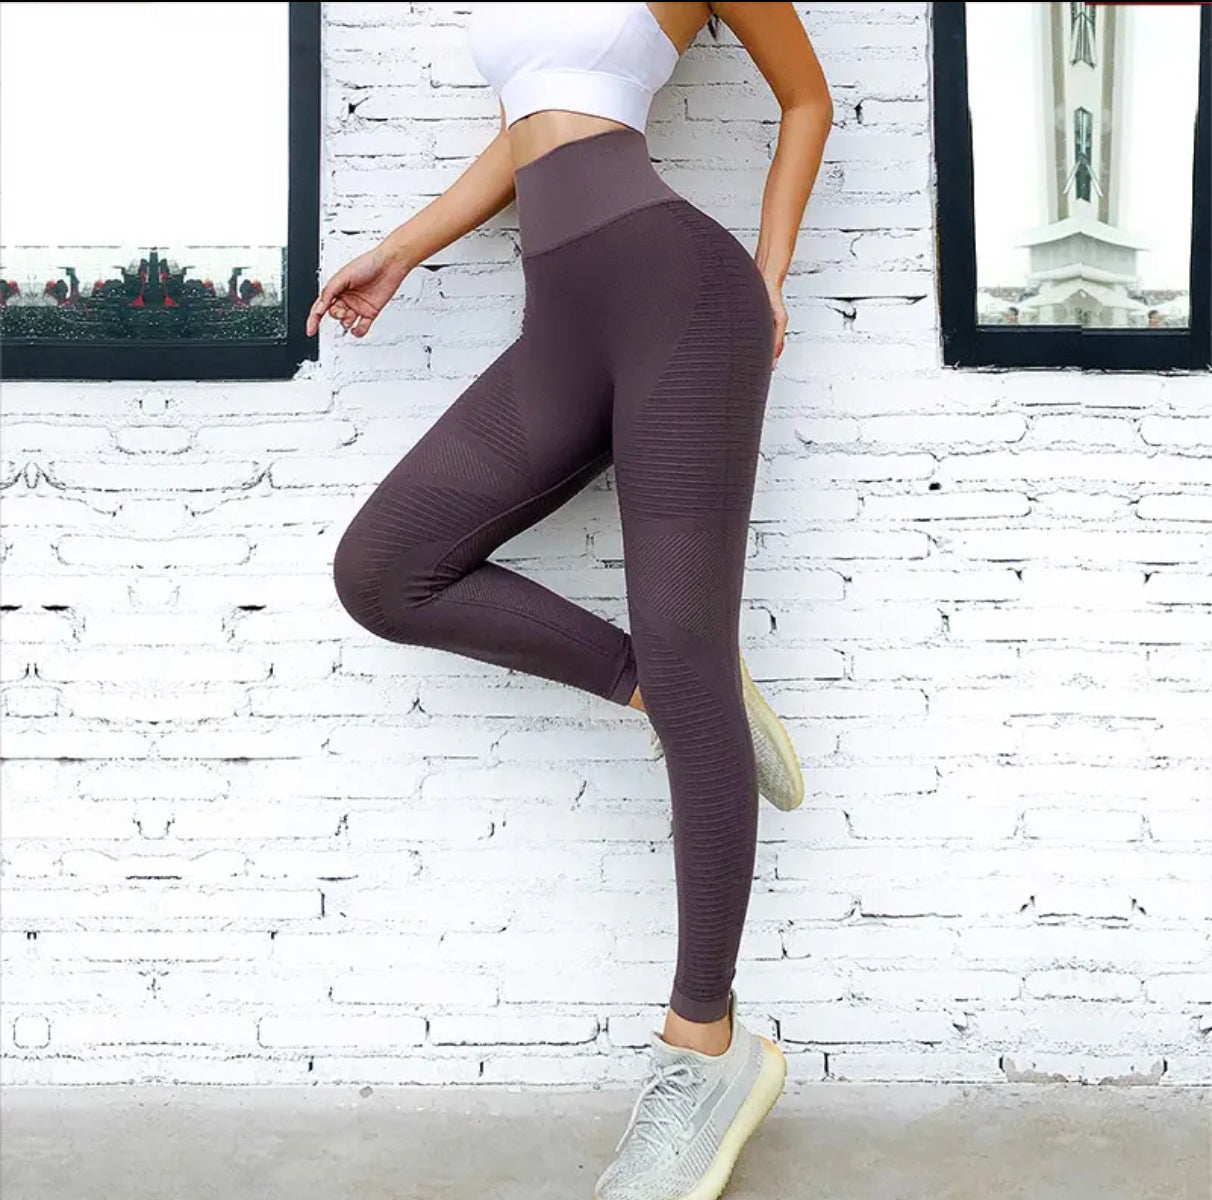  Womens High Waist Yoga Pants Tummy Control Slimming Booty  Leggings Workout Running Butt Lift Tights XL A-Pink